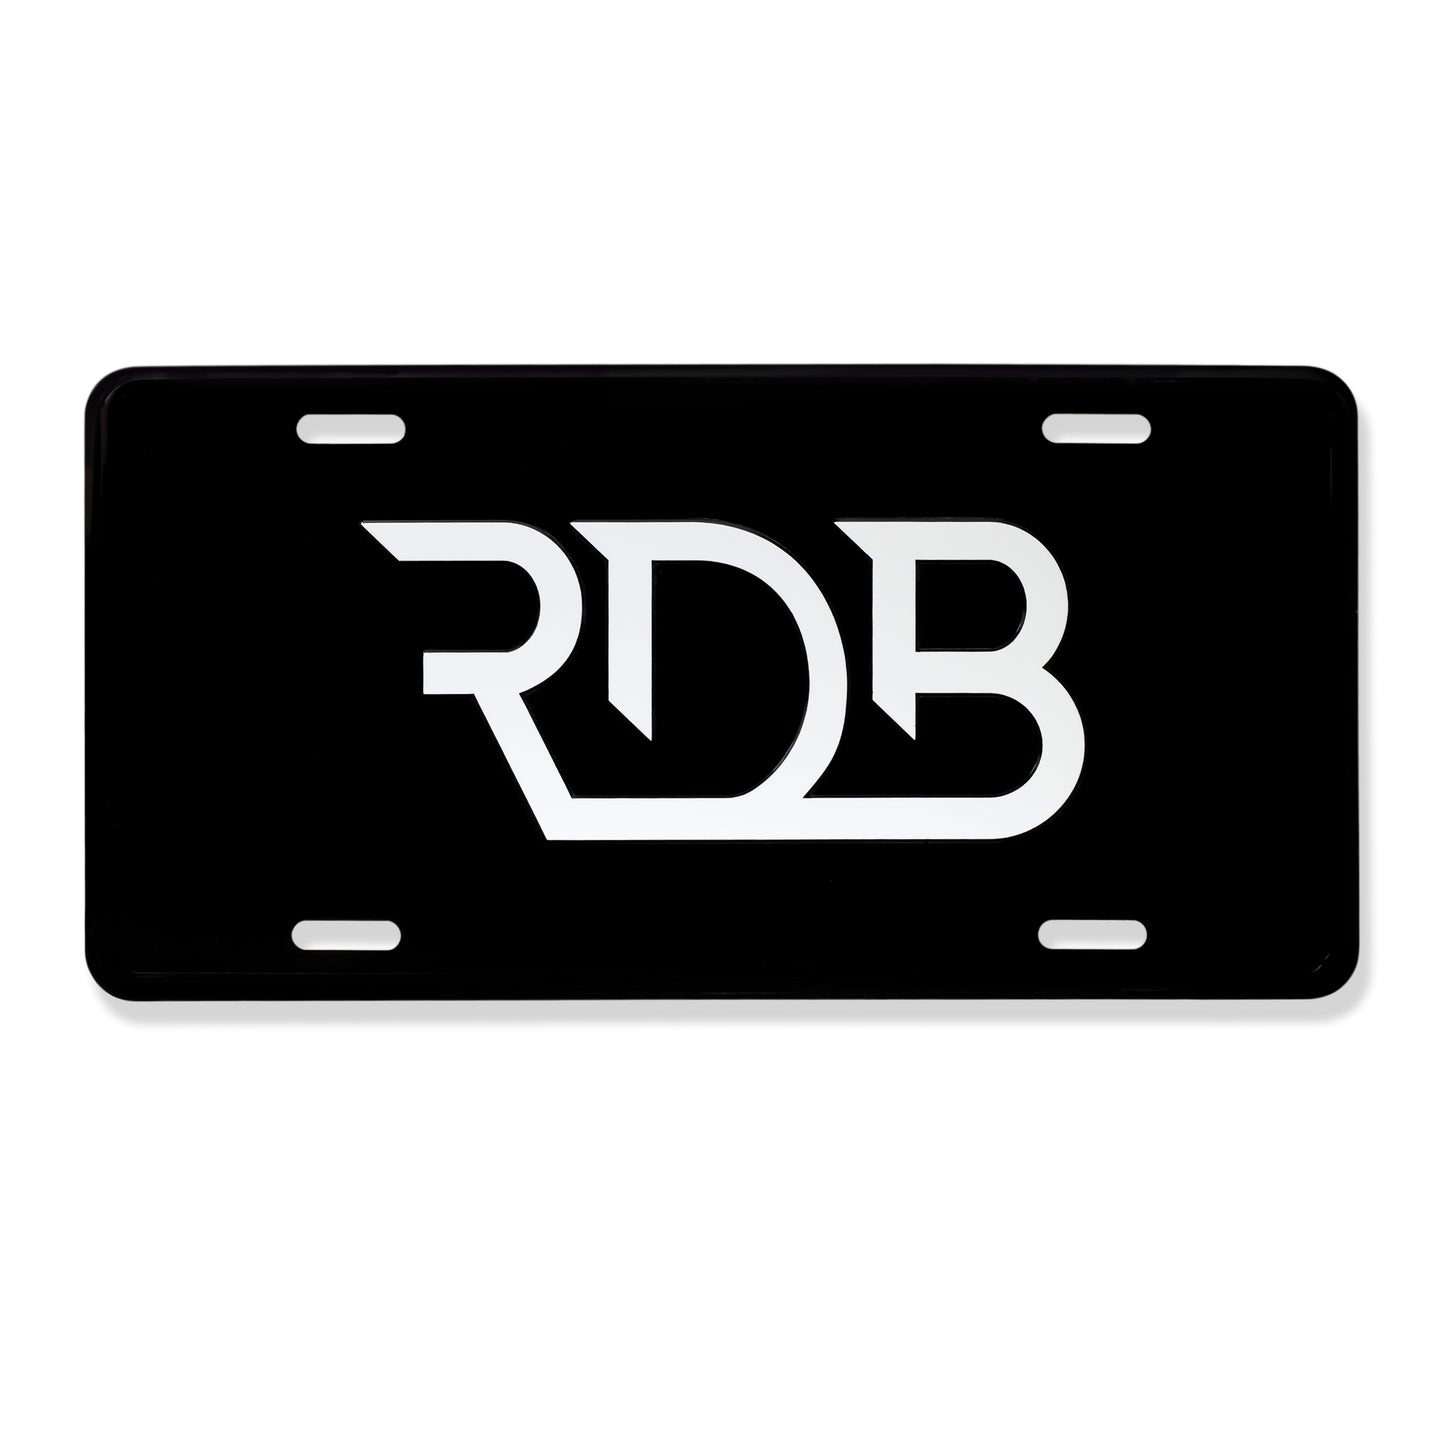 RDB License Plate